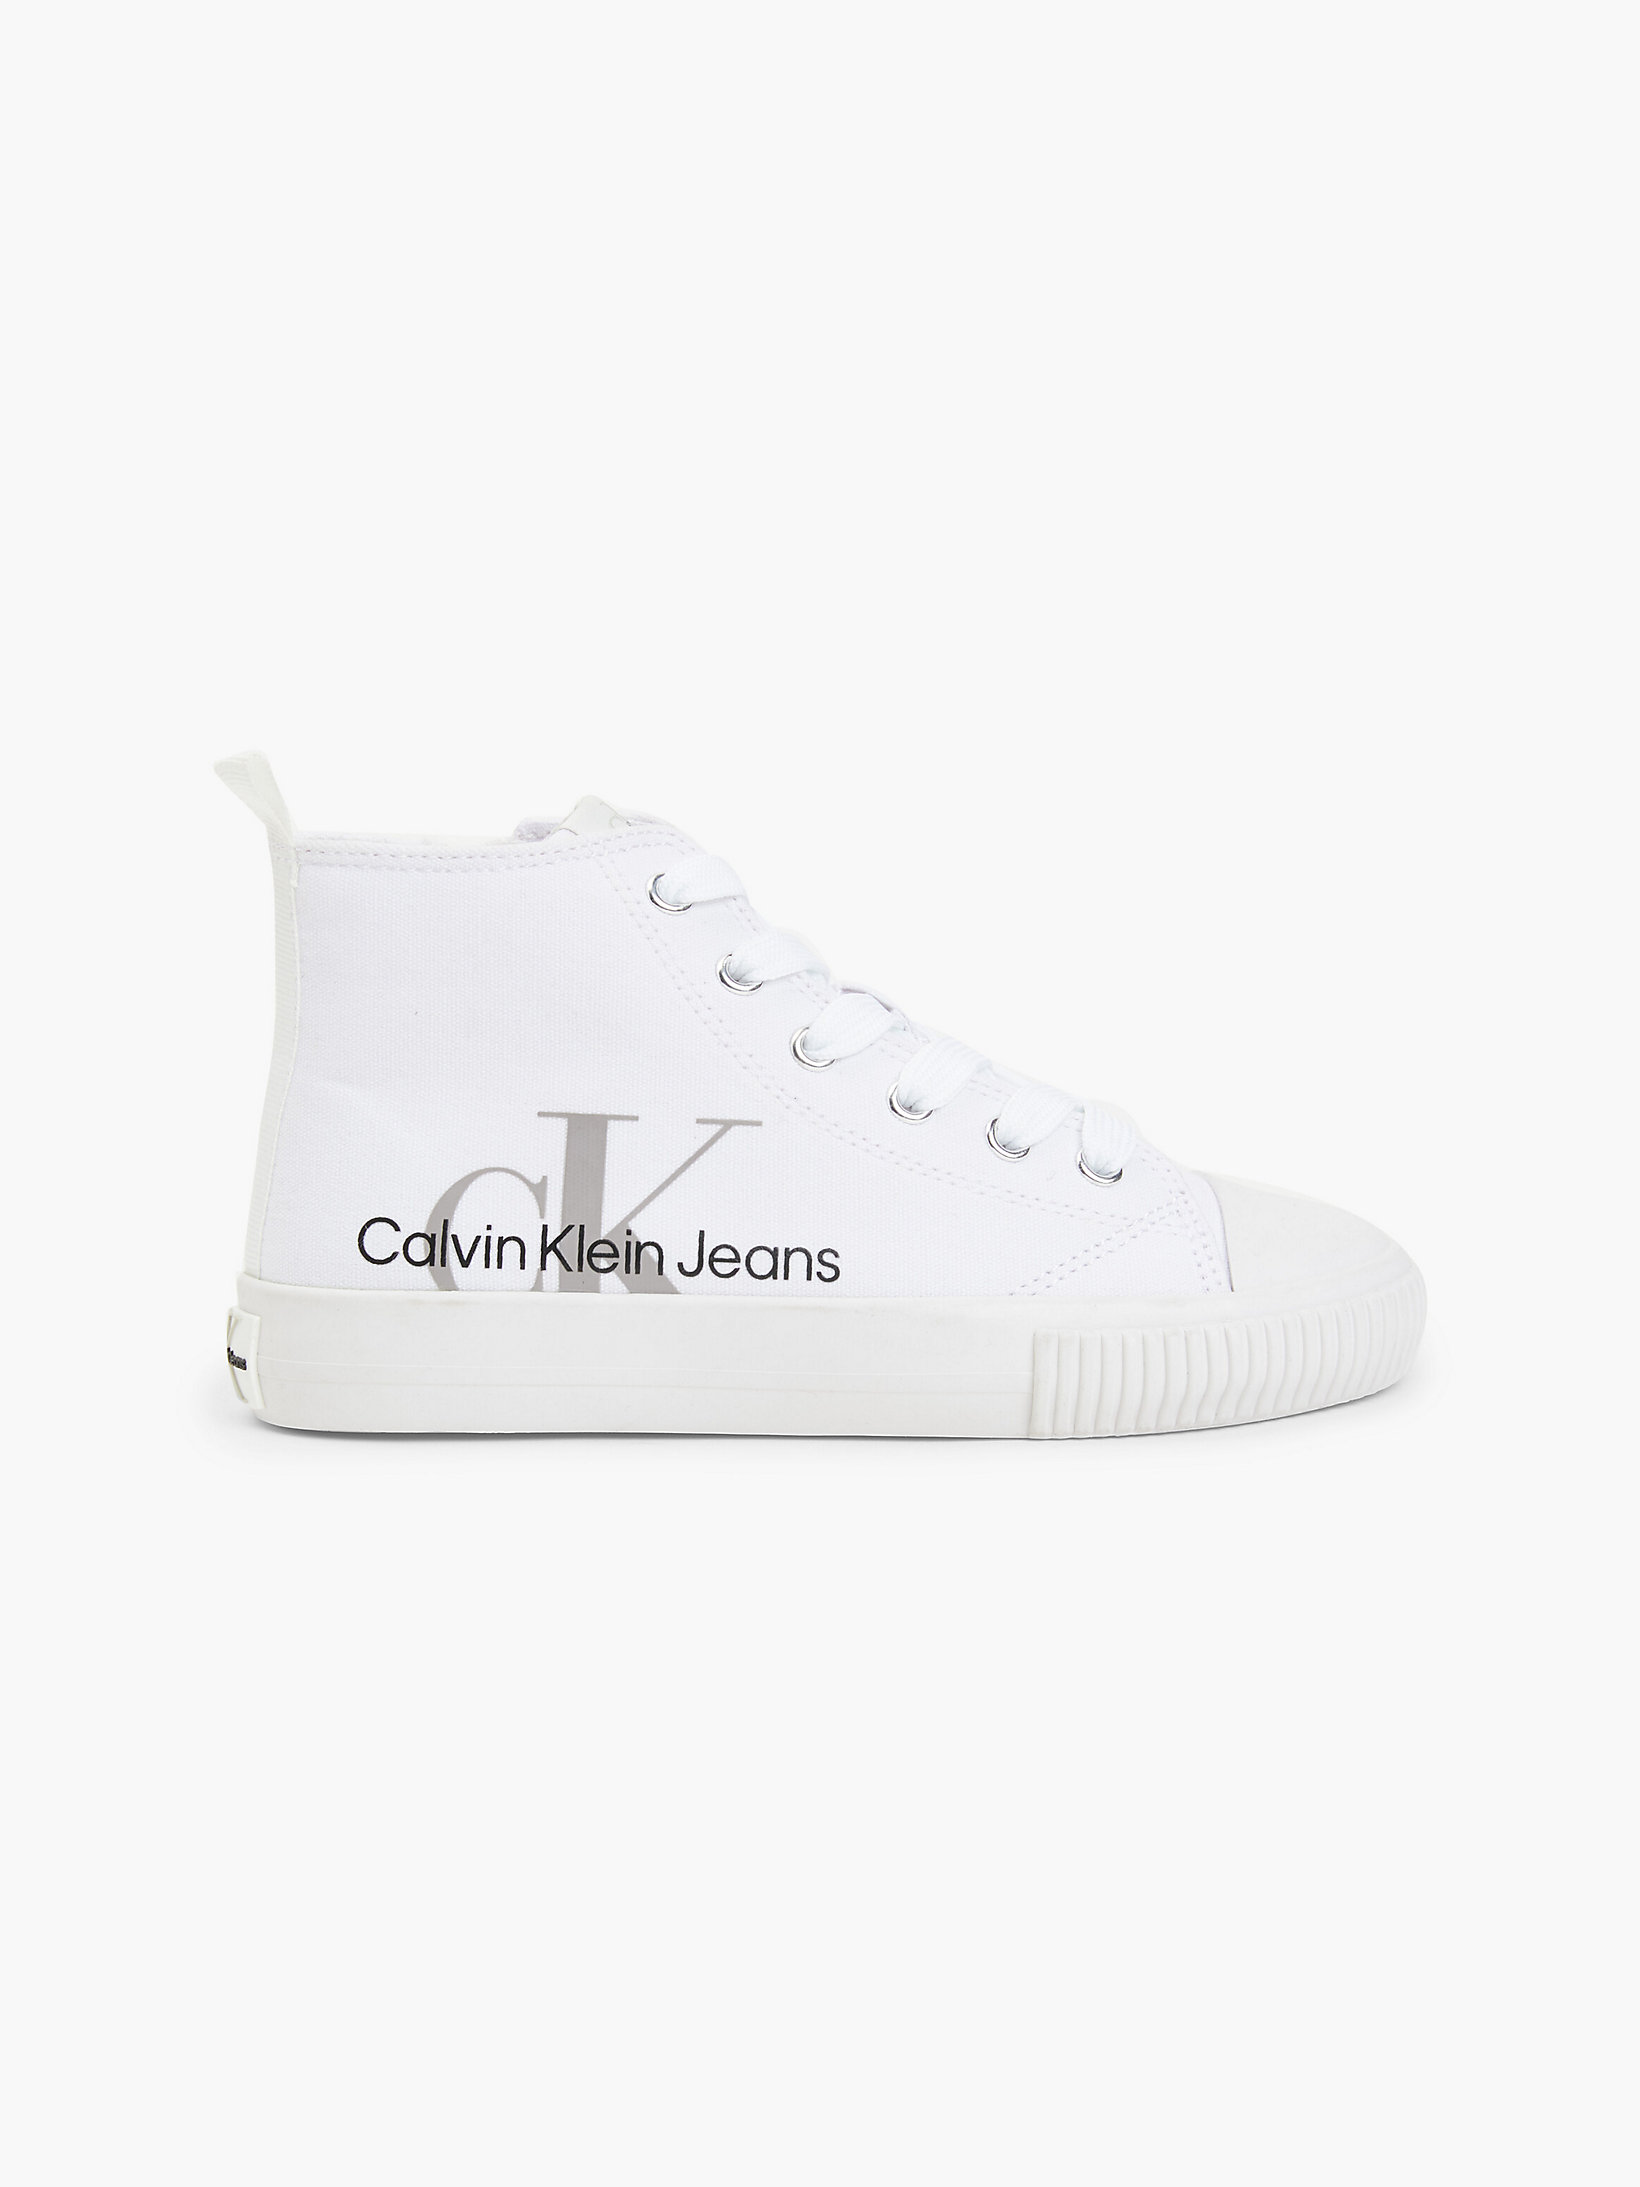 White > Кроссовки с высоким берцем из переработанной парусины > undefined kids unisex - Calvin Klein